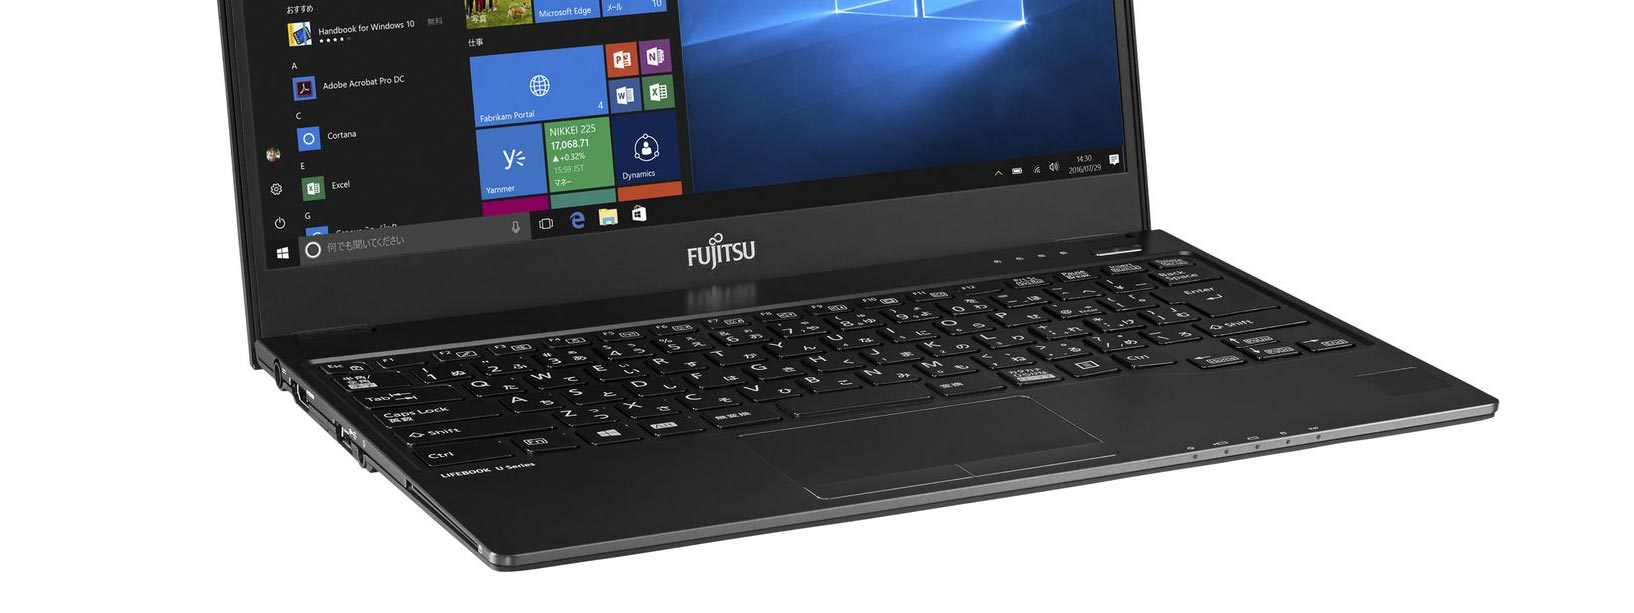 Fujitsu ra mắt laptop 13